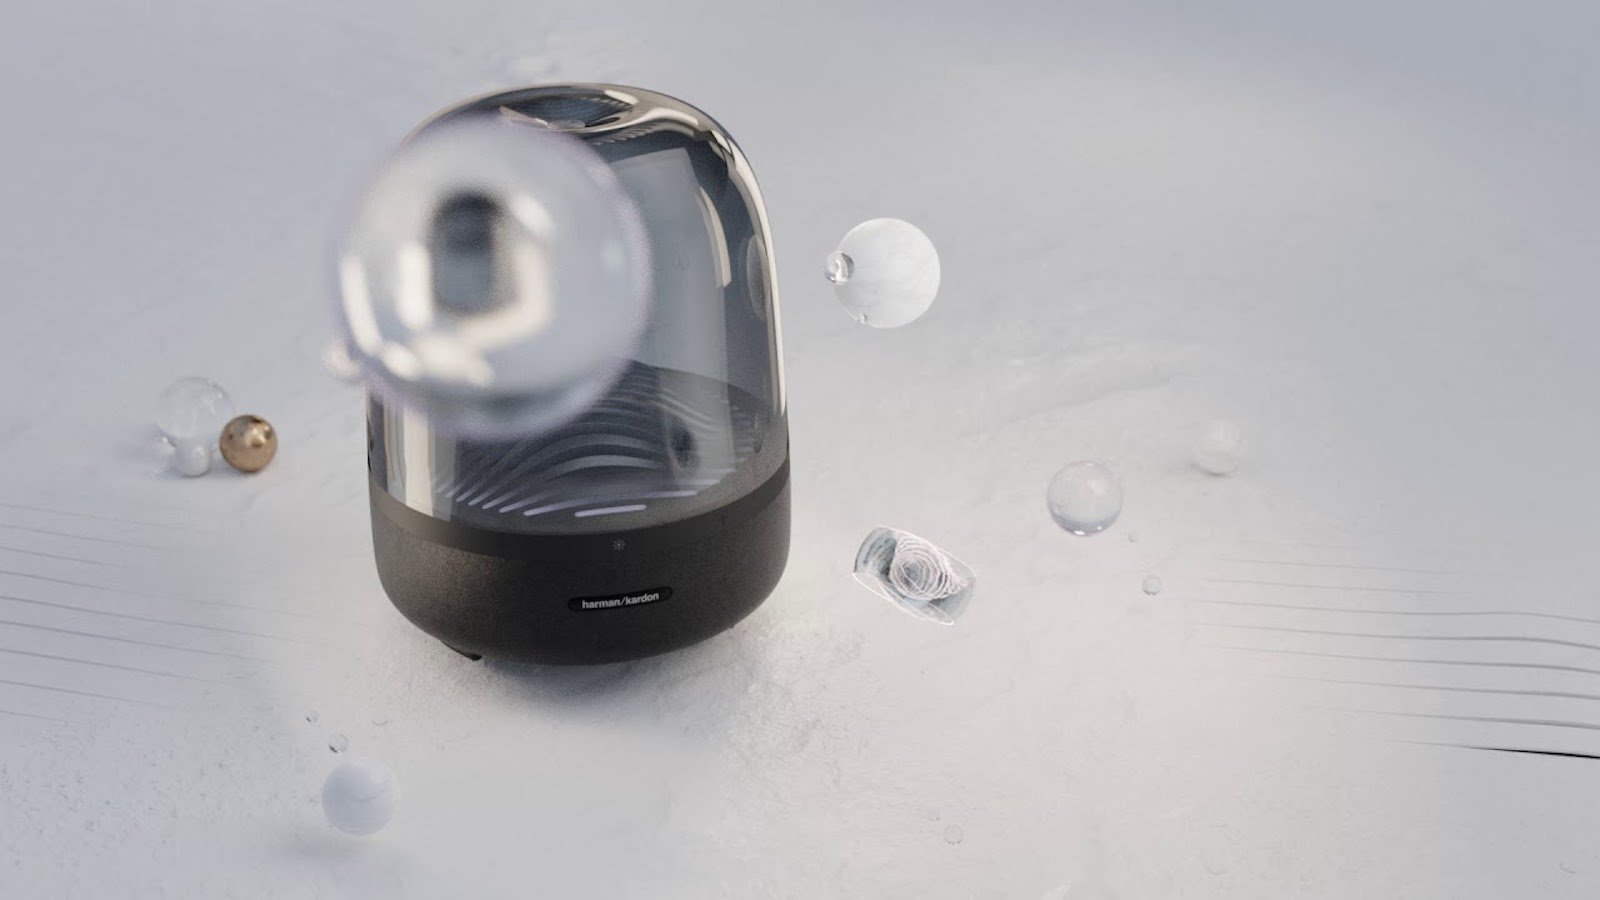 Harman Kardon Aura Studio 3 Ambient Lighting Speaker lets you experience music in a visual way